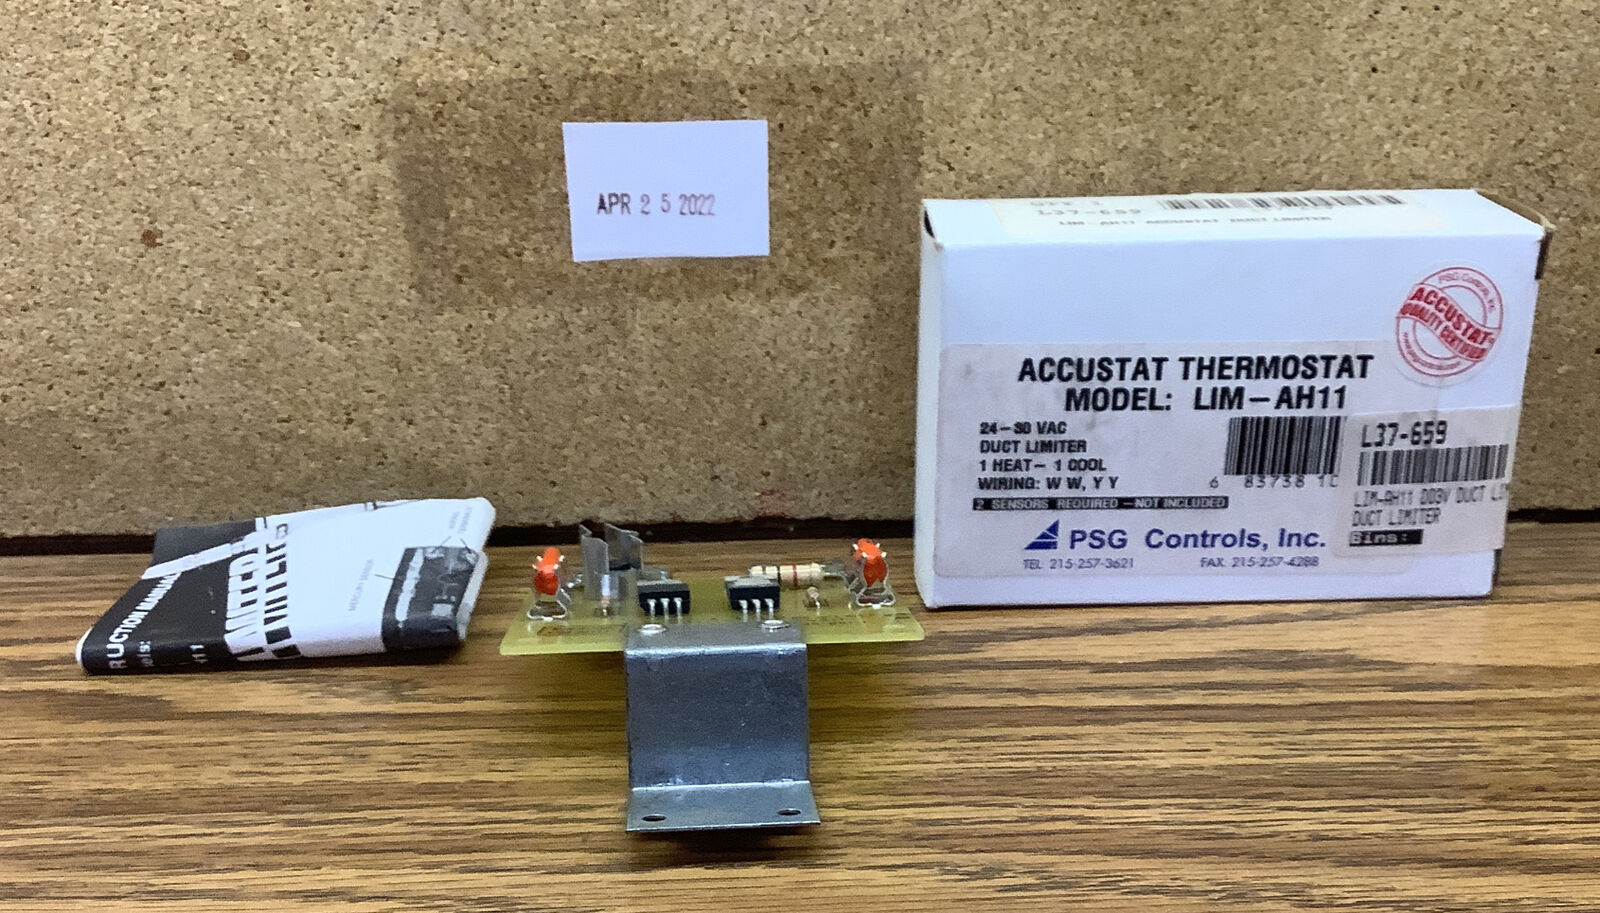 NOB PSG Controls LIM-AH11 Accustat Thermostat Duct Limiter